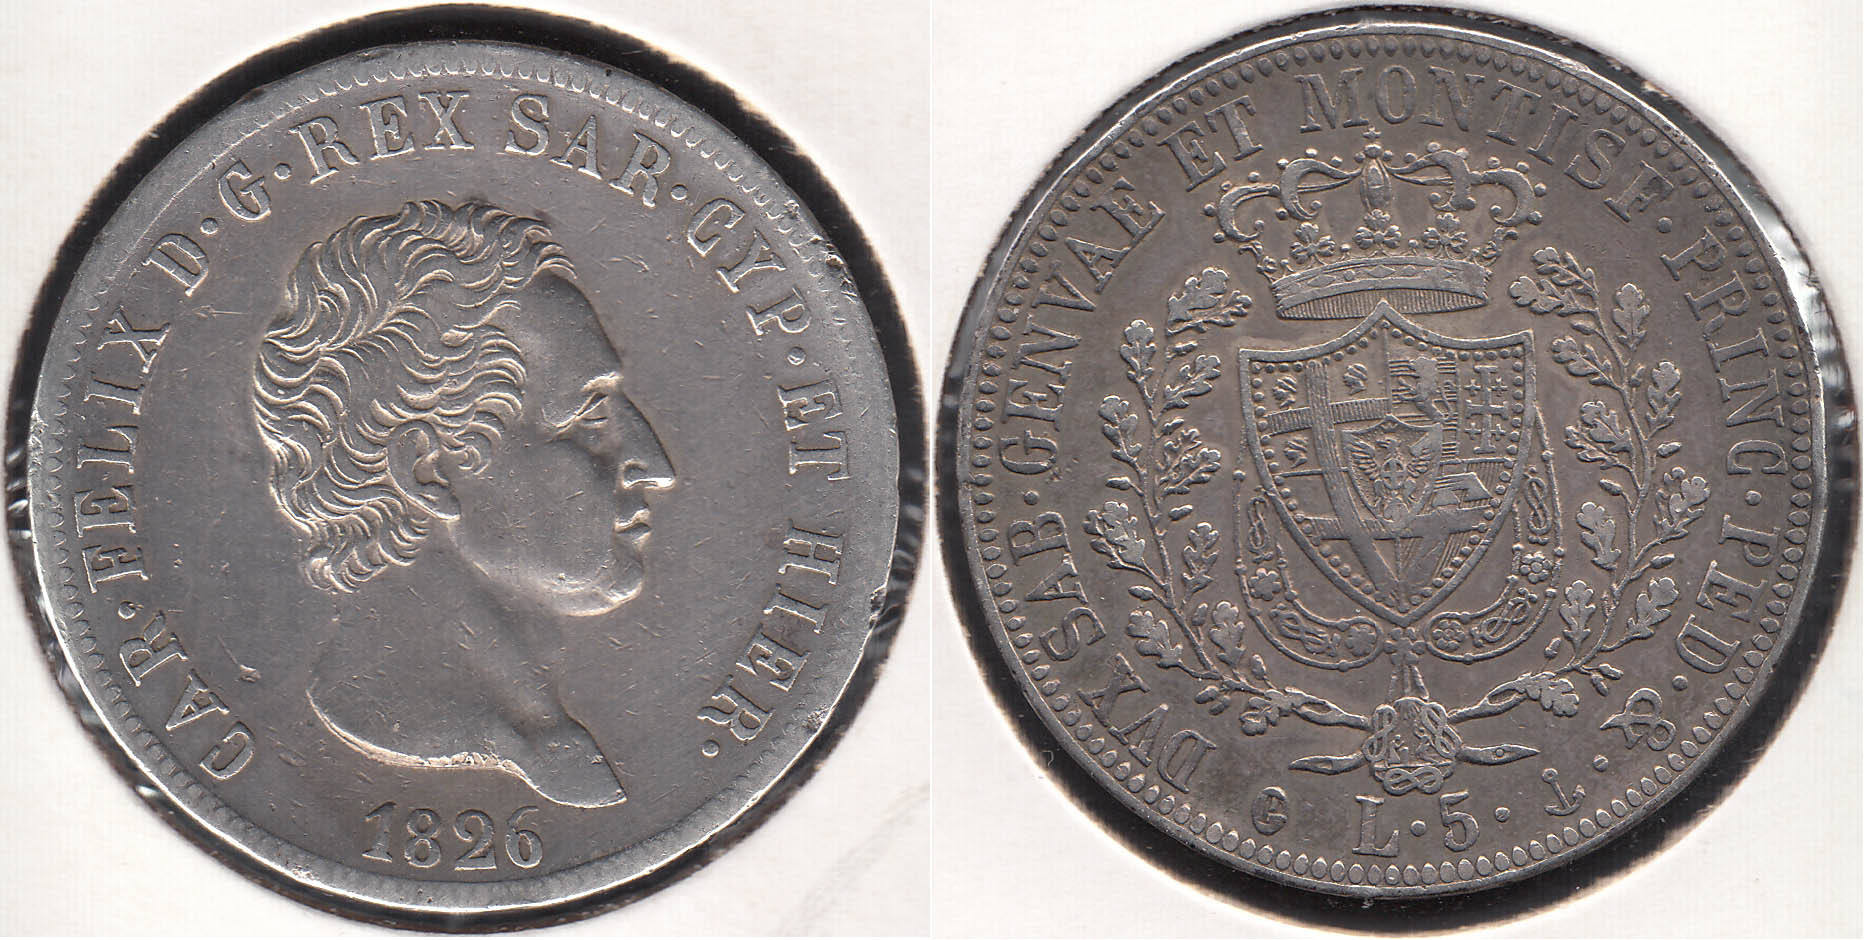 CERDEÑA - SARDINIA. 5 LIRAS DE 1826 P. PLATA 0.900.